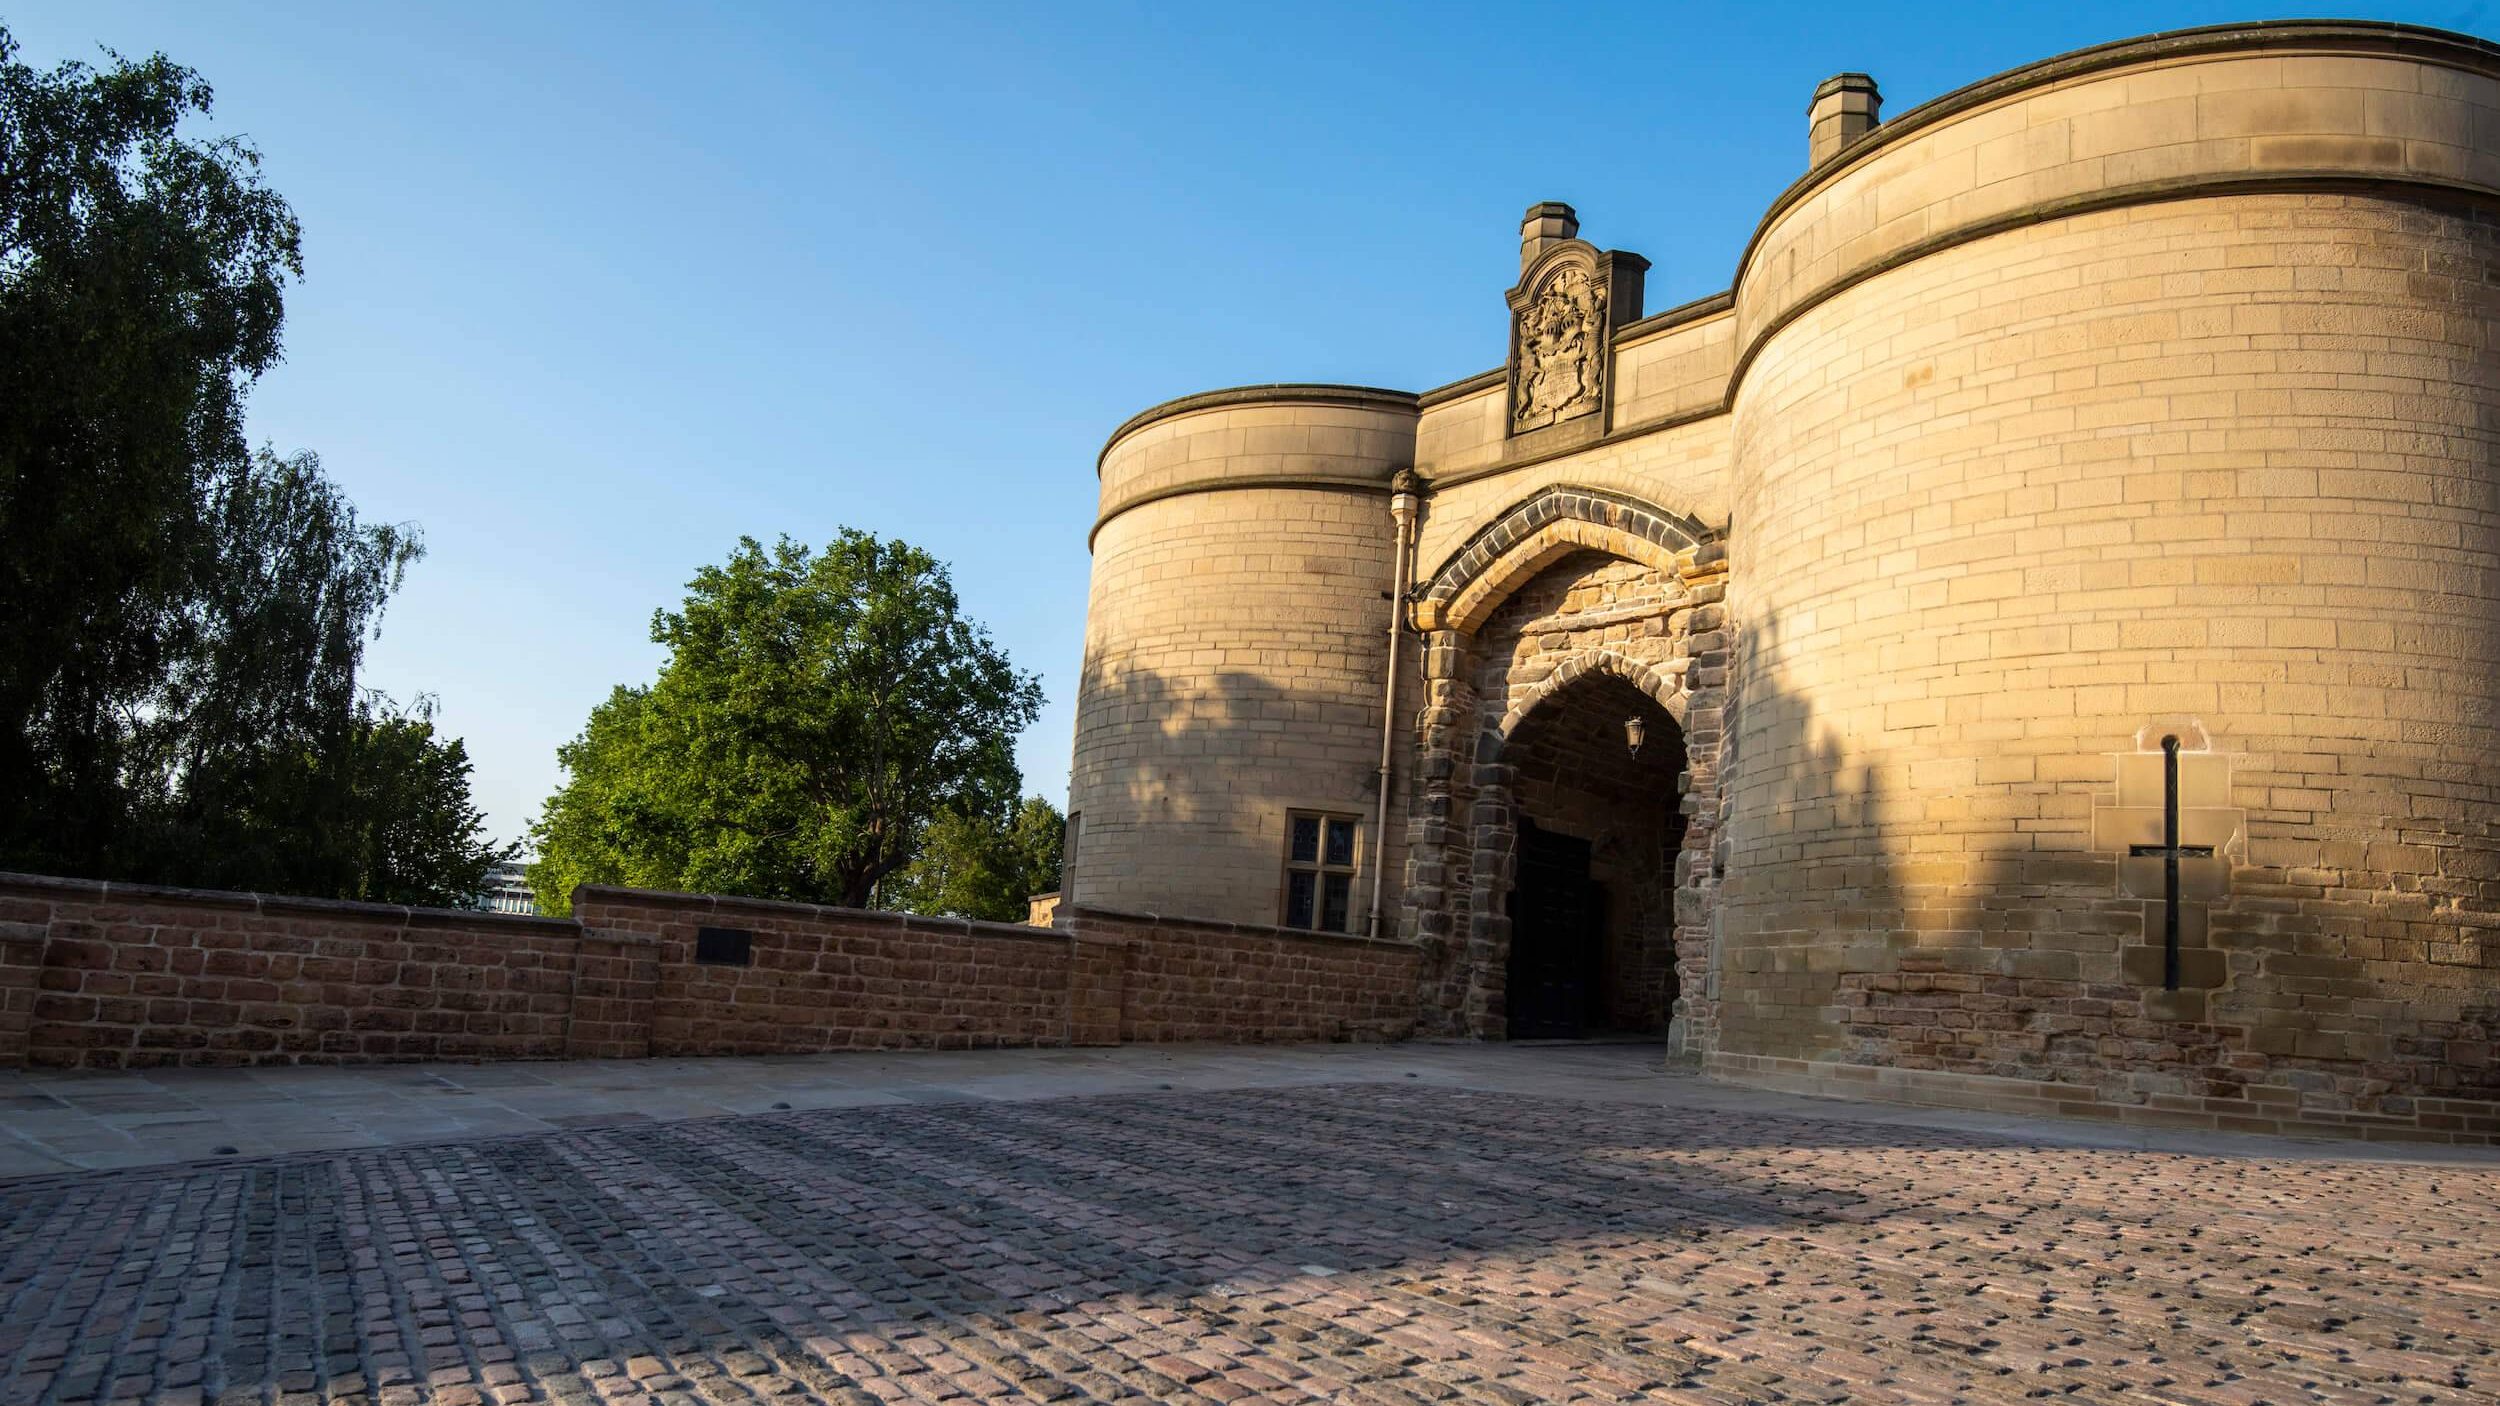 Nottingham Castle closed to the public on 20 November